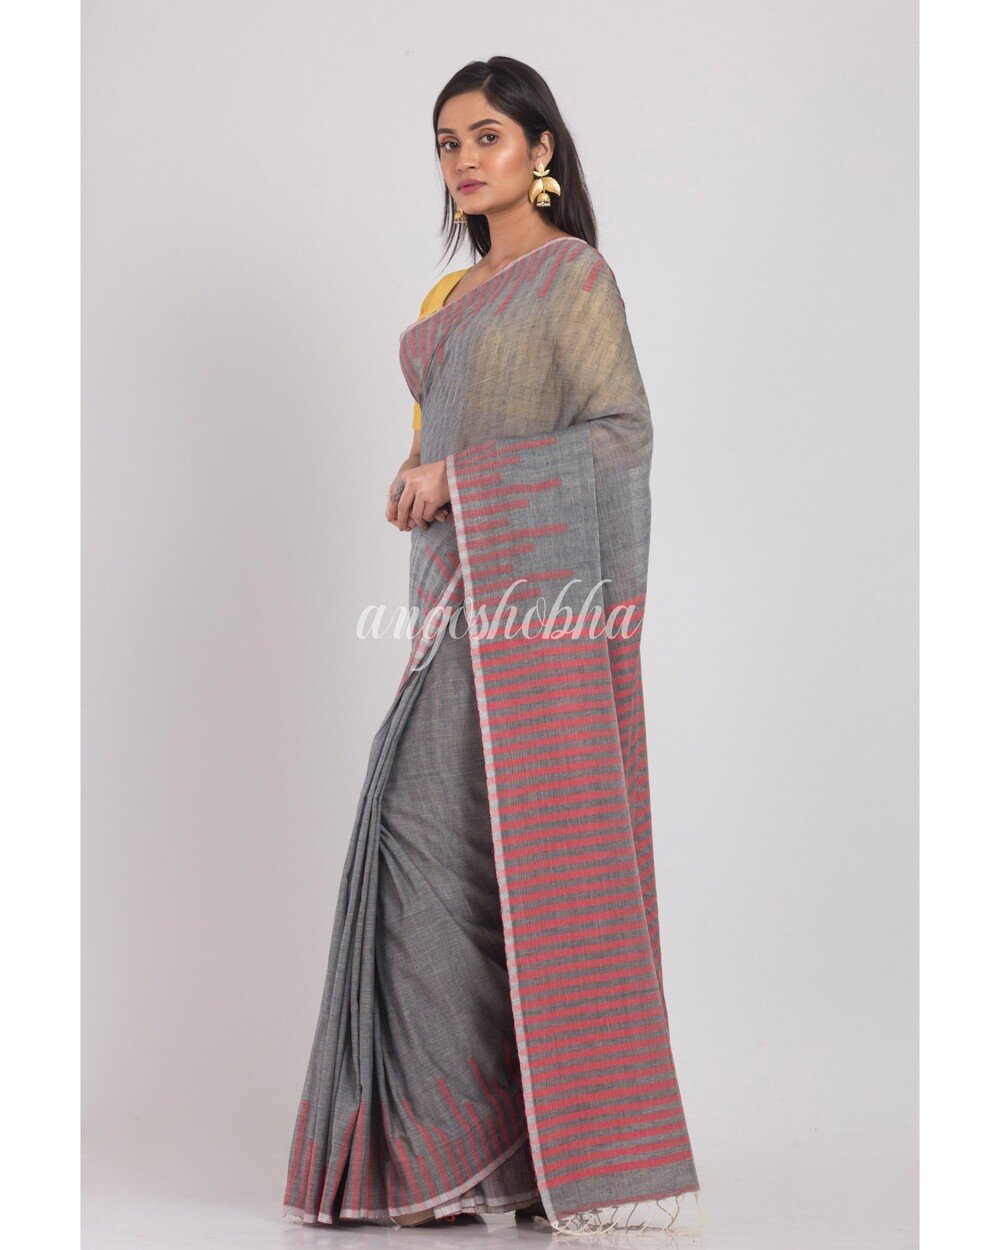 Women's Grey Handloom Cotton Saree - Angoshobha